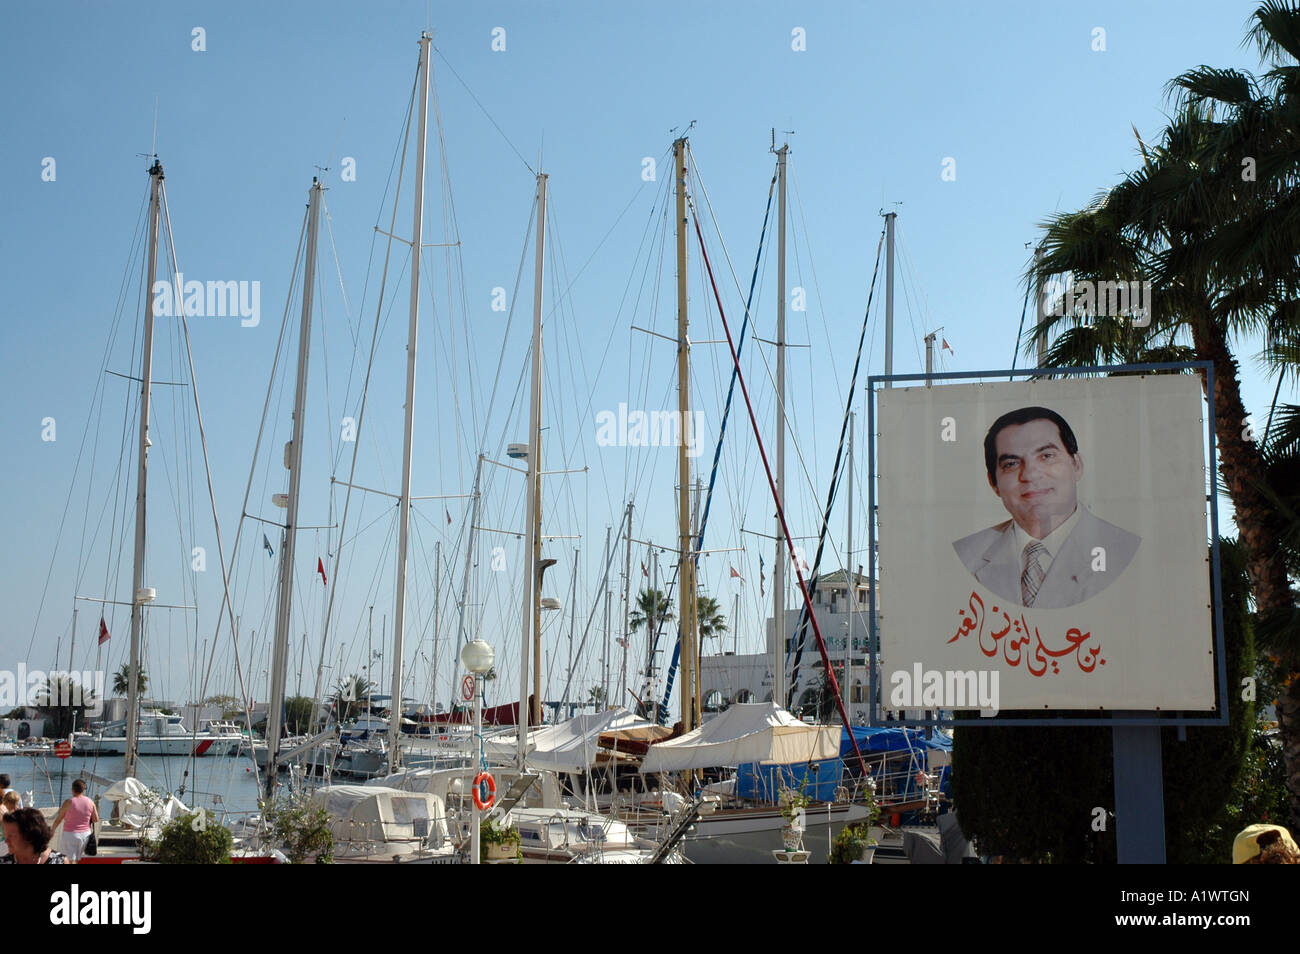 Tunisian president Zine El Abidine Ben Ali portrait on a billboard in Port El Kantaoui marina in Tunisia Stock Photo